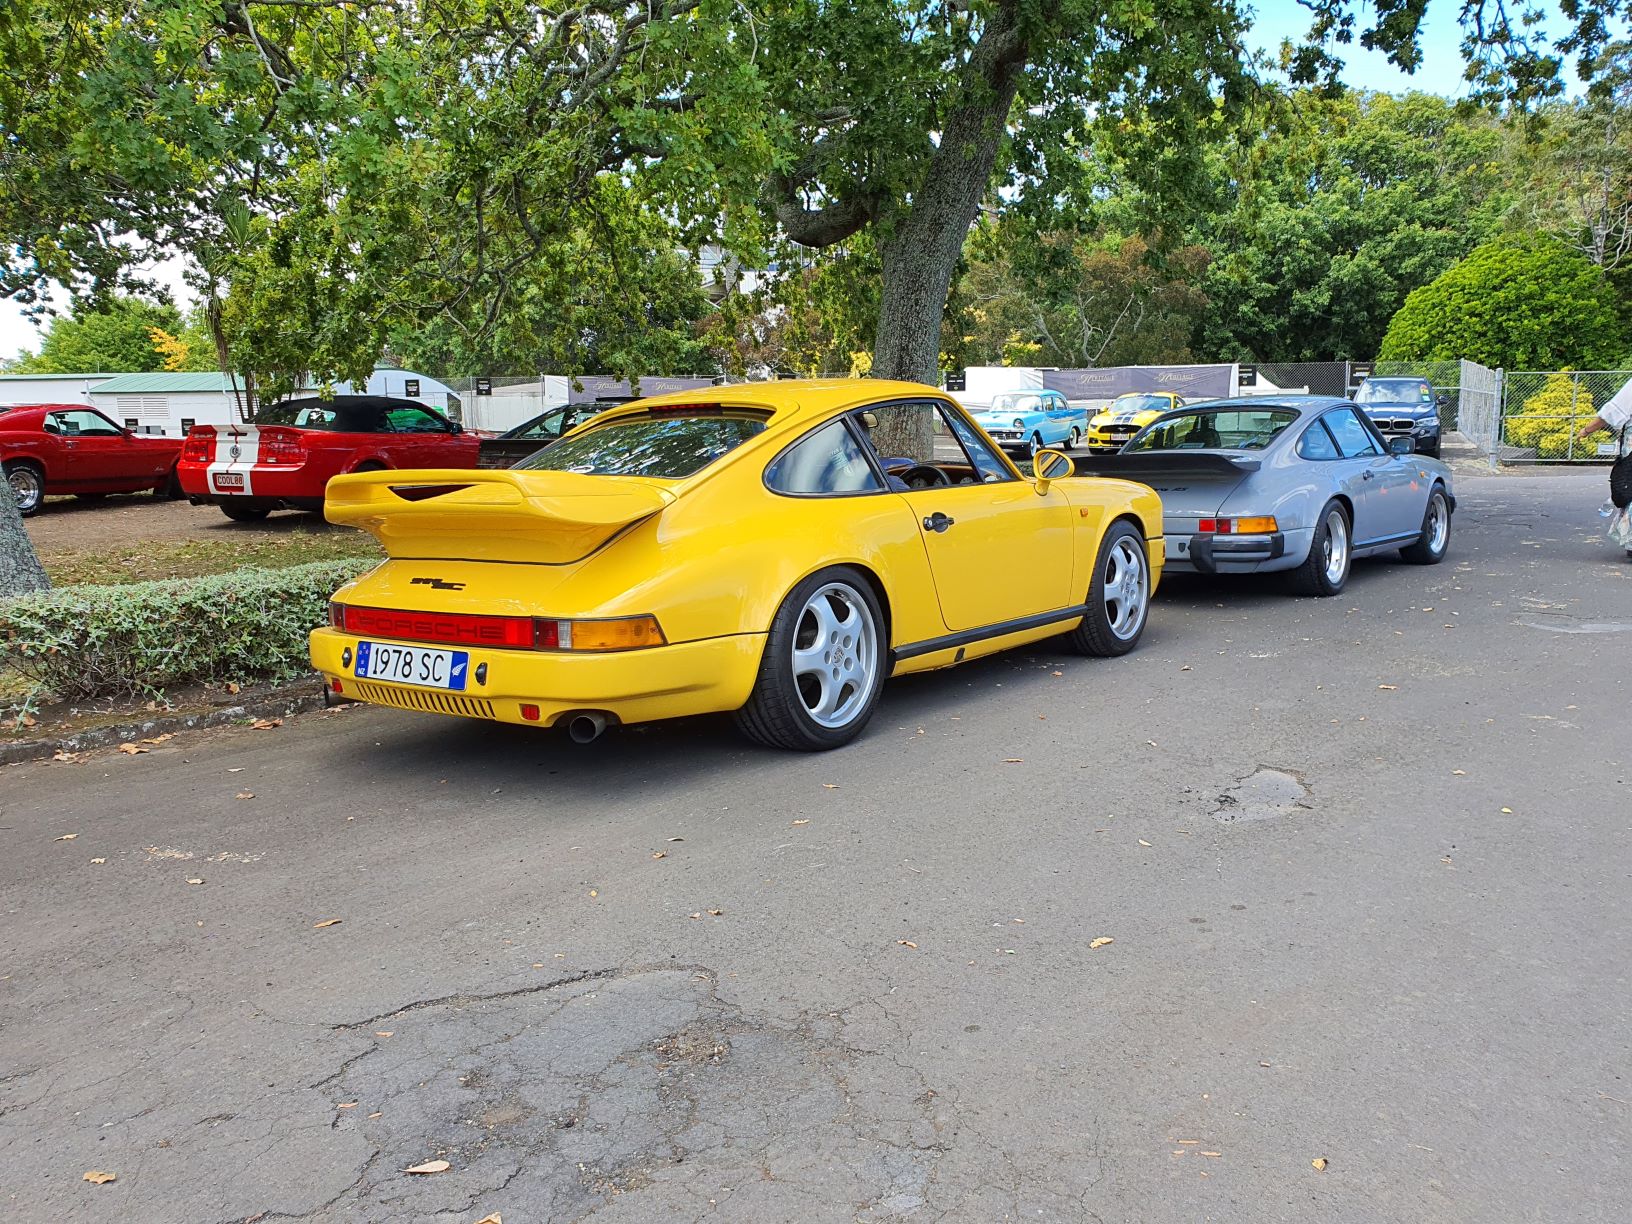 Two Porsche 911s